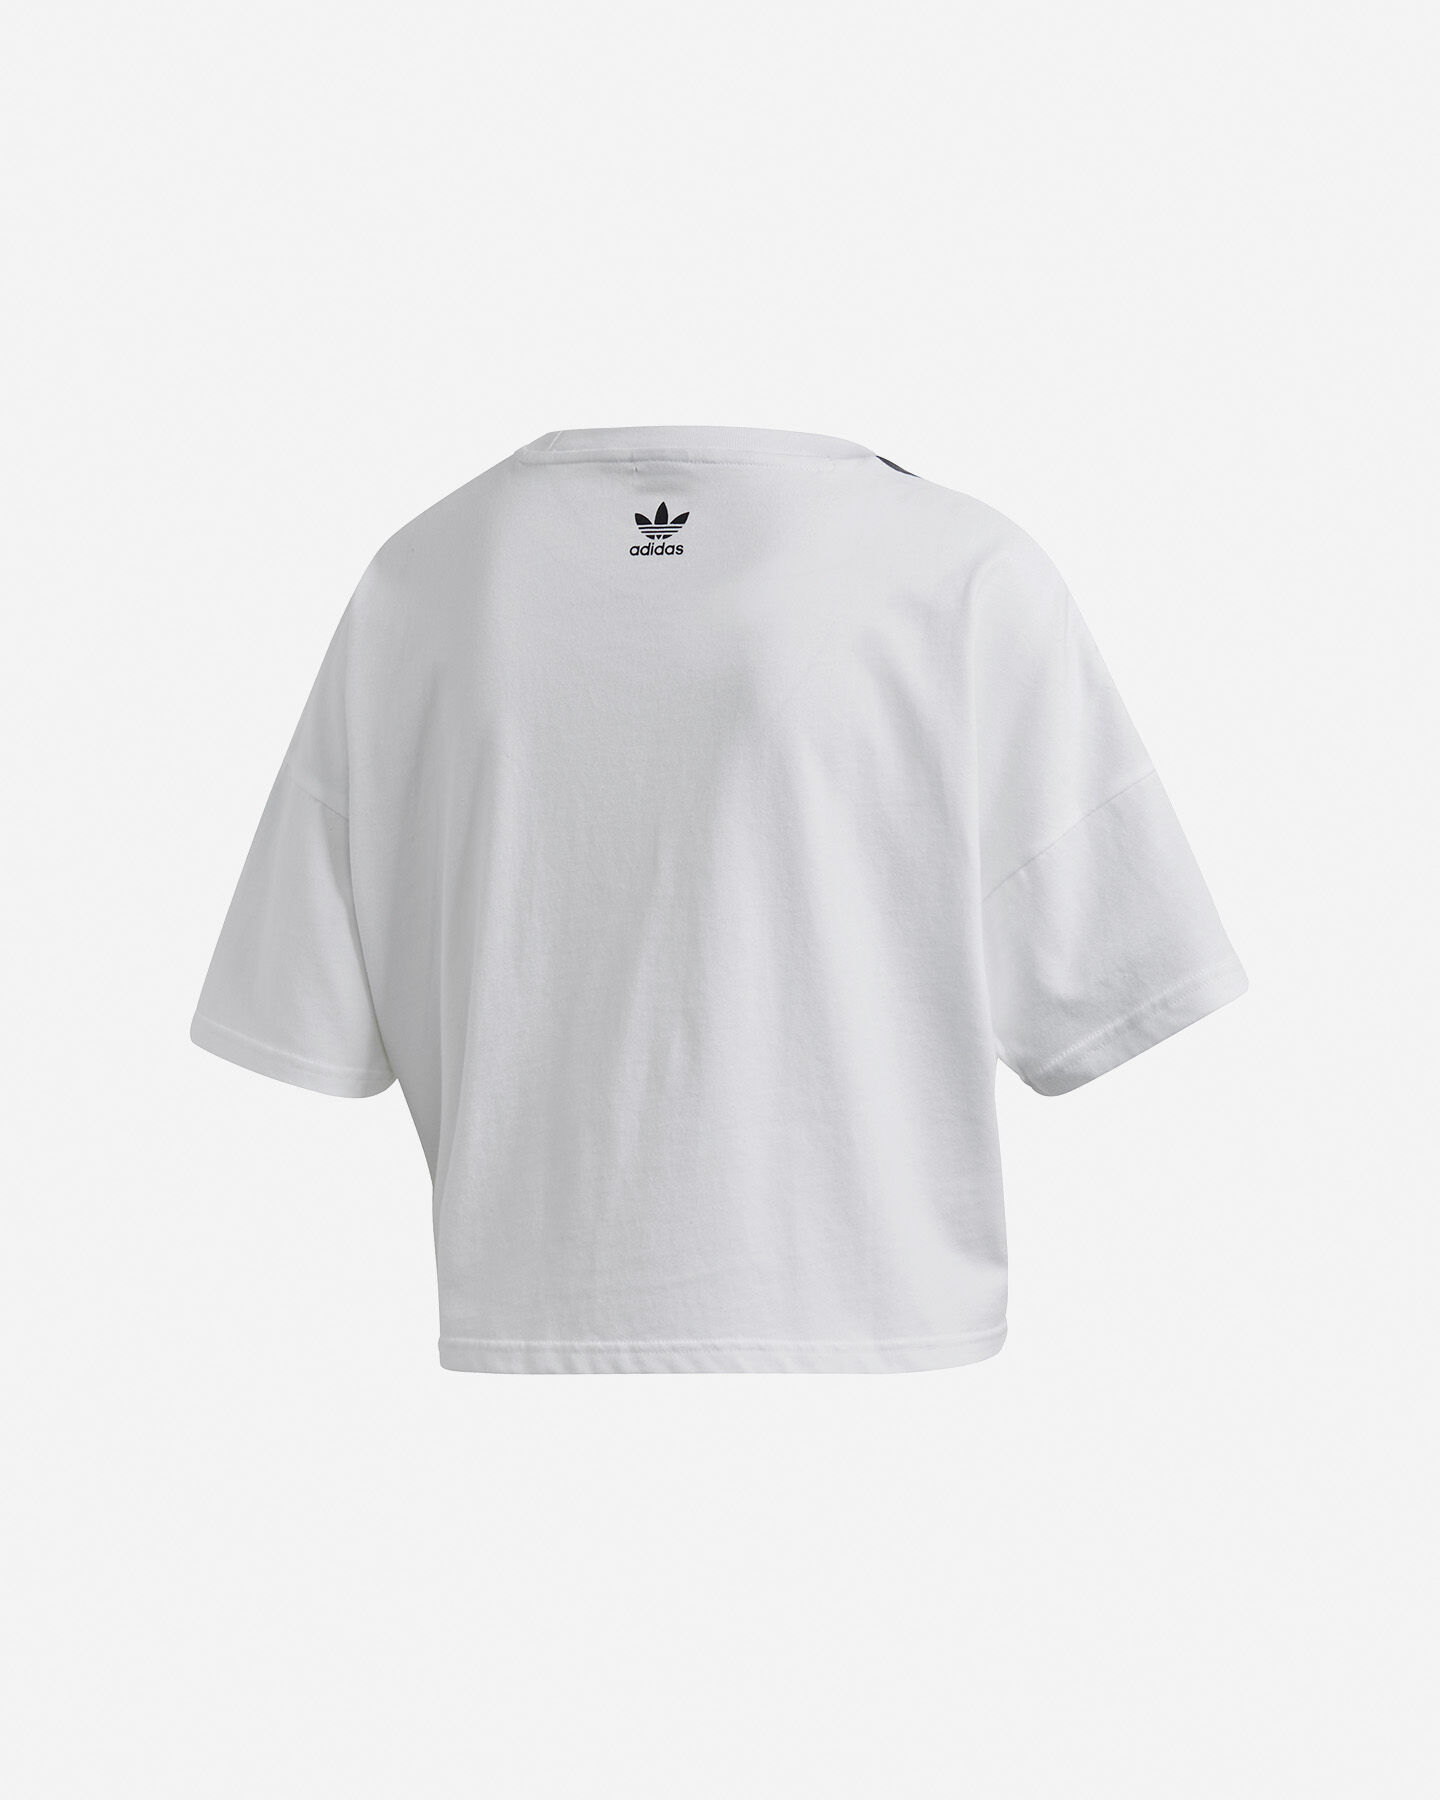  T-Shirt ADIDAS LARGE LOGO W S5148171|UNI|36 scatto 1